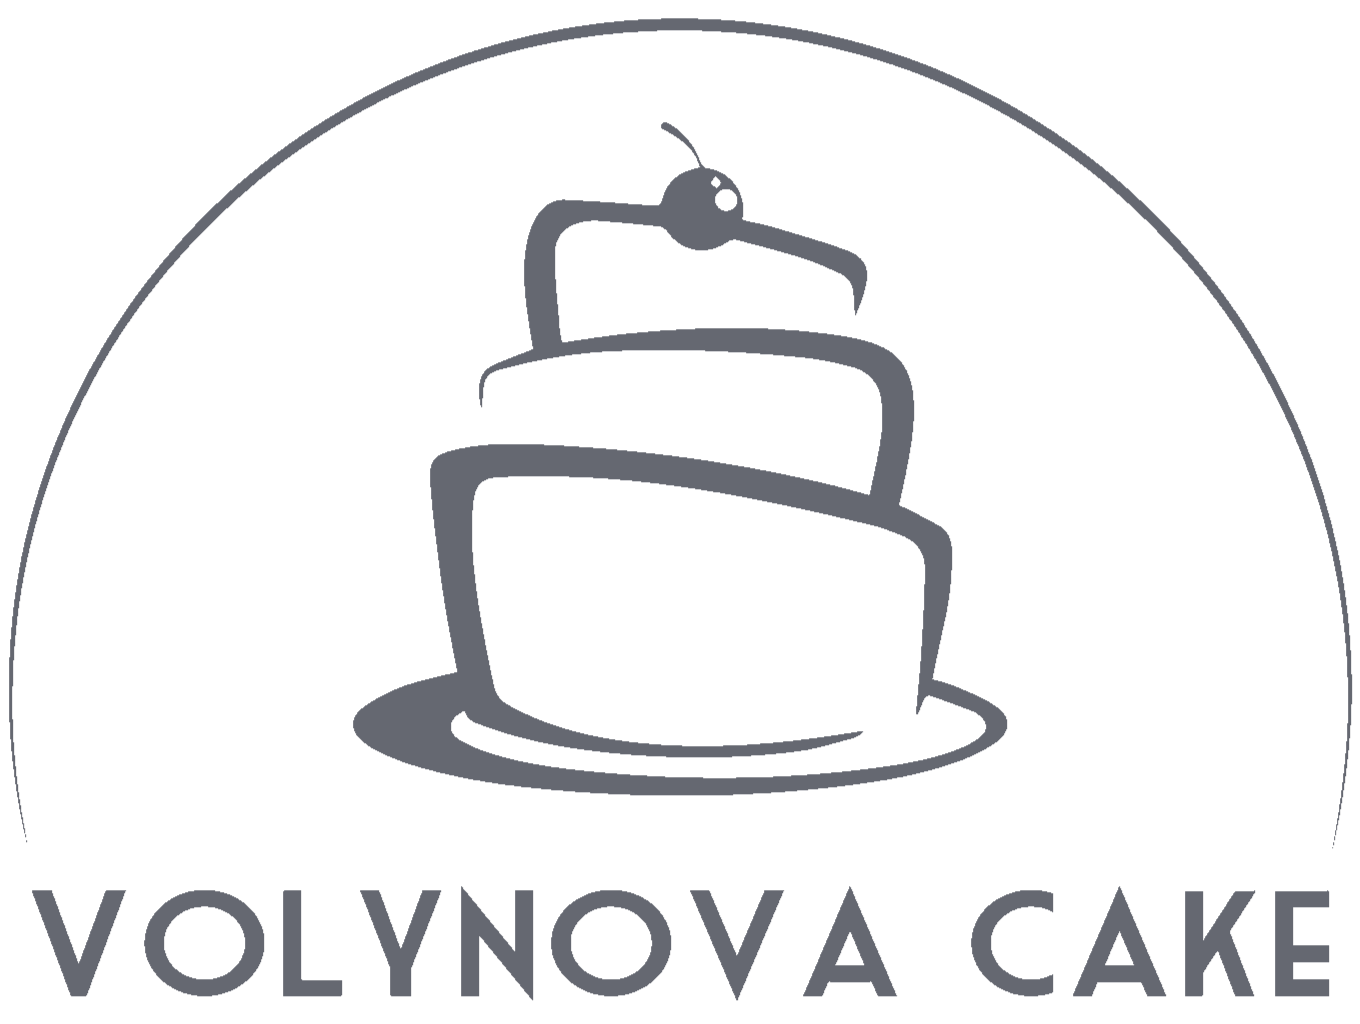 VOLYNOVA CAKE